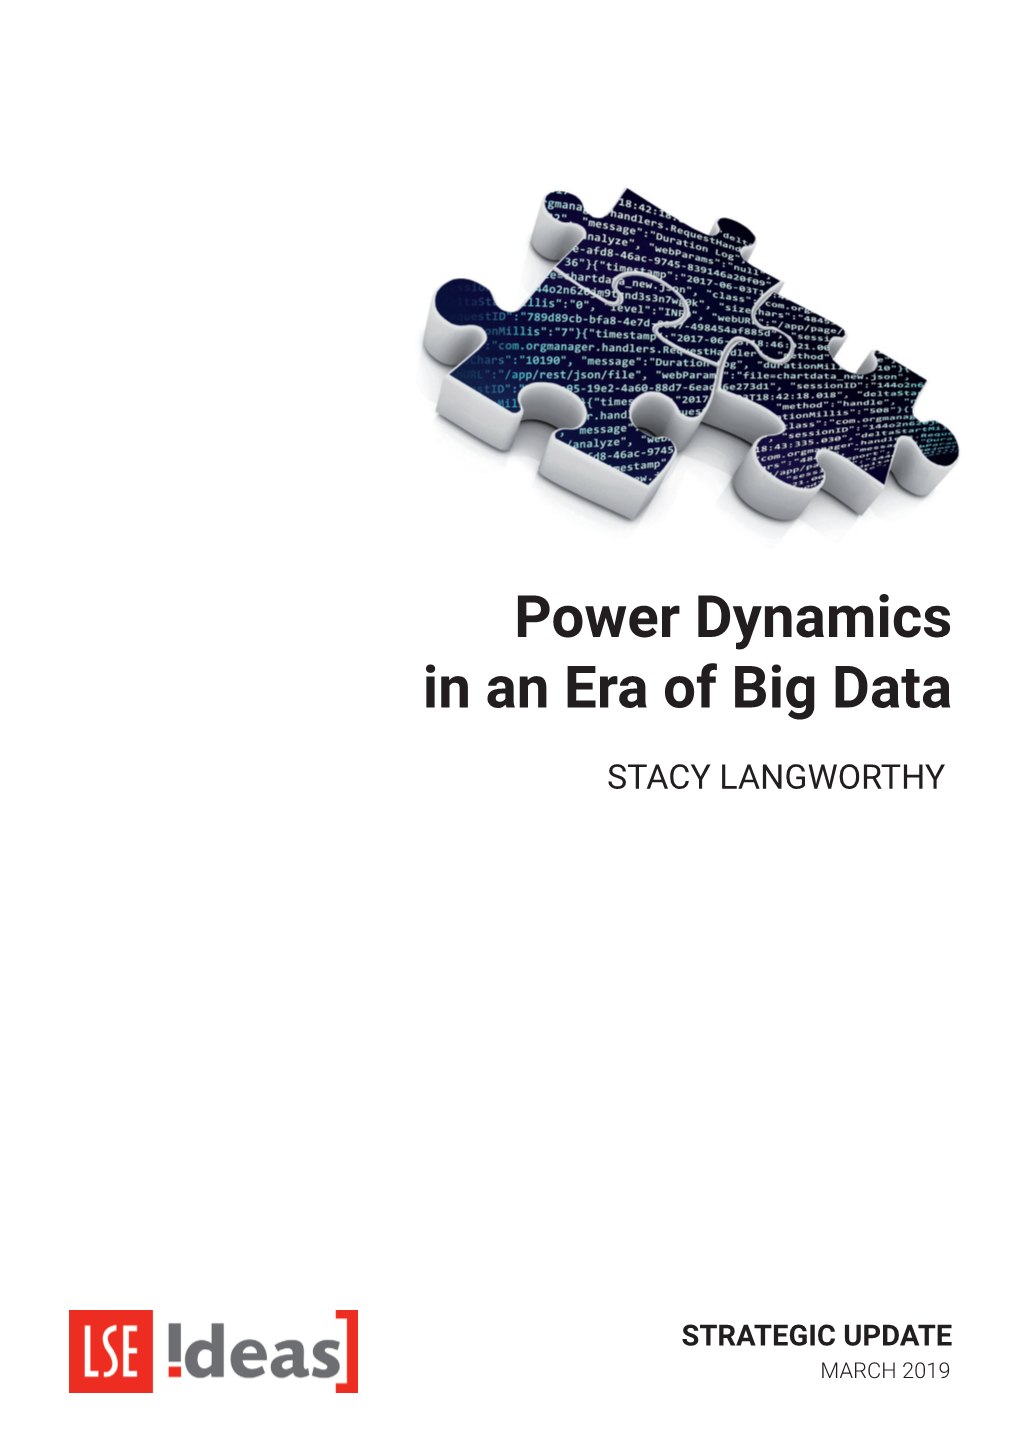 Power Dynamics in an Era of Big Data